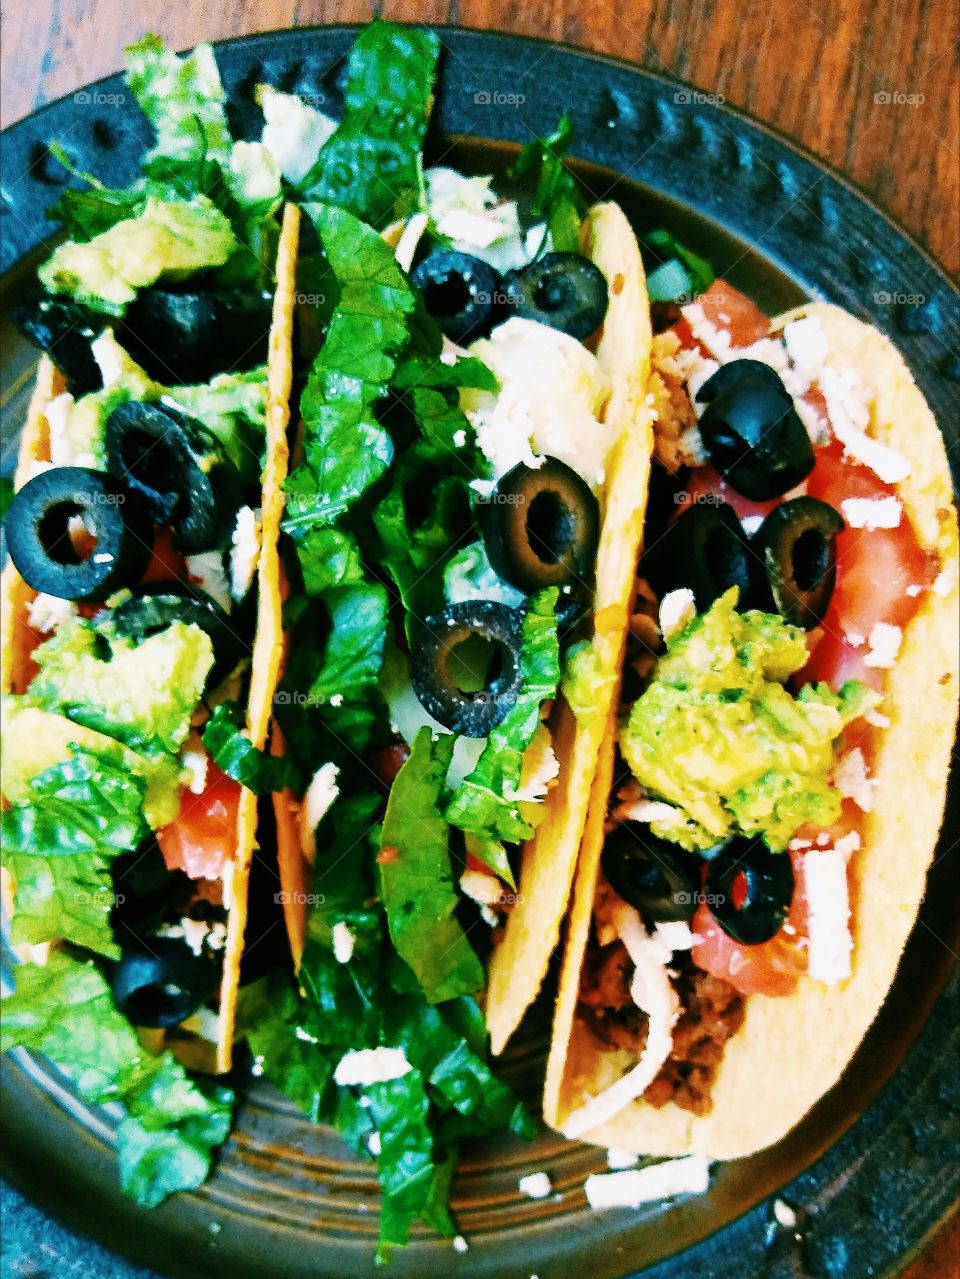 Tacos - homemade and vegan